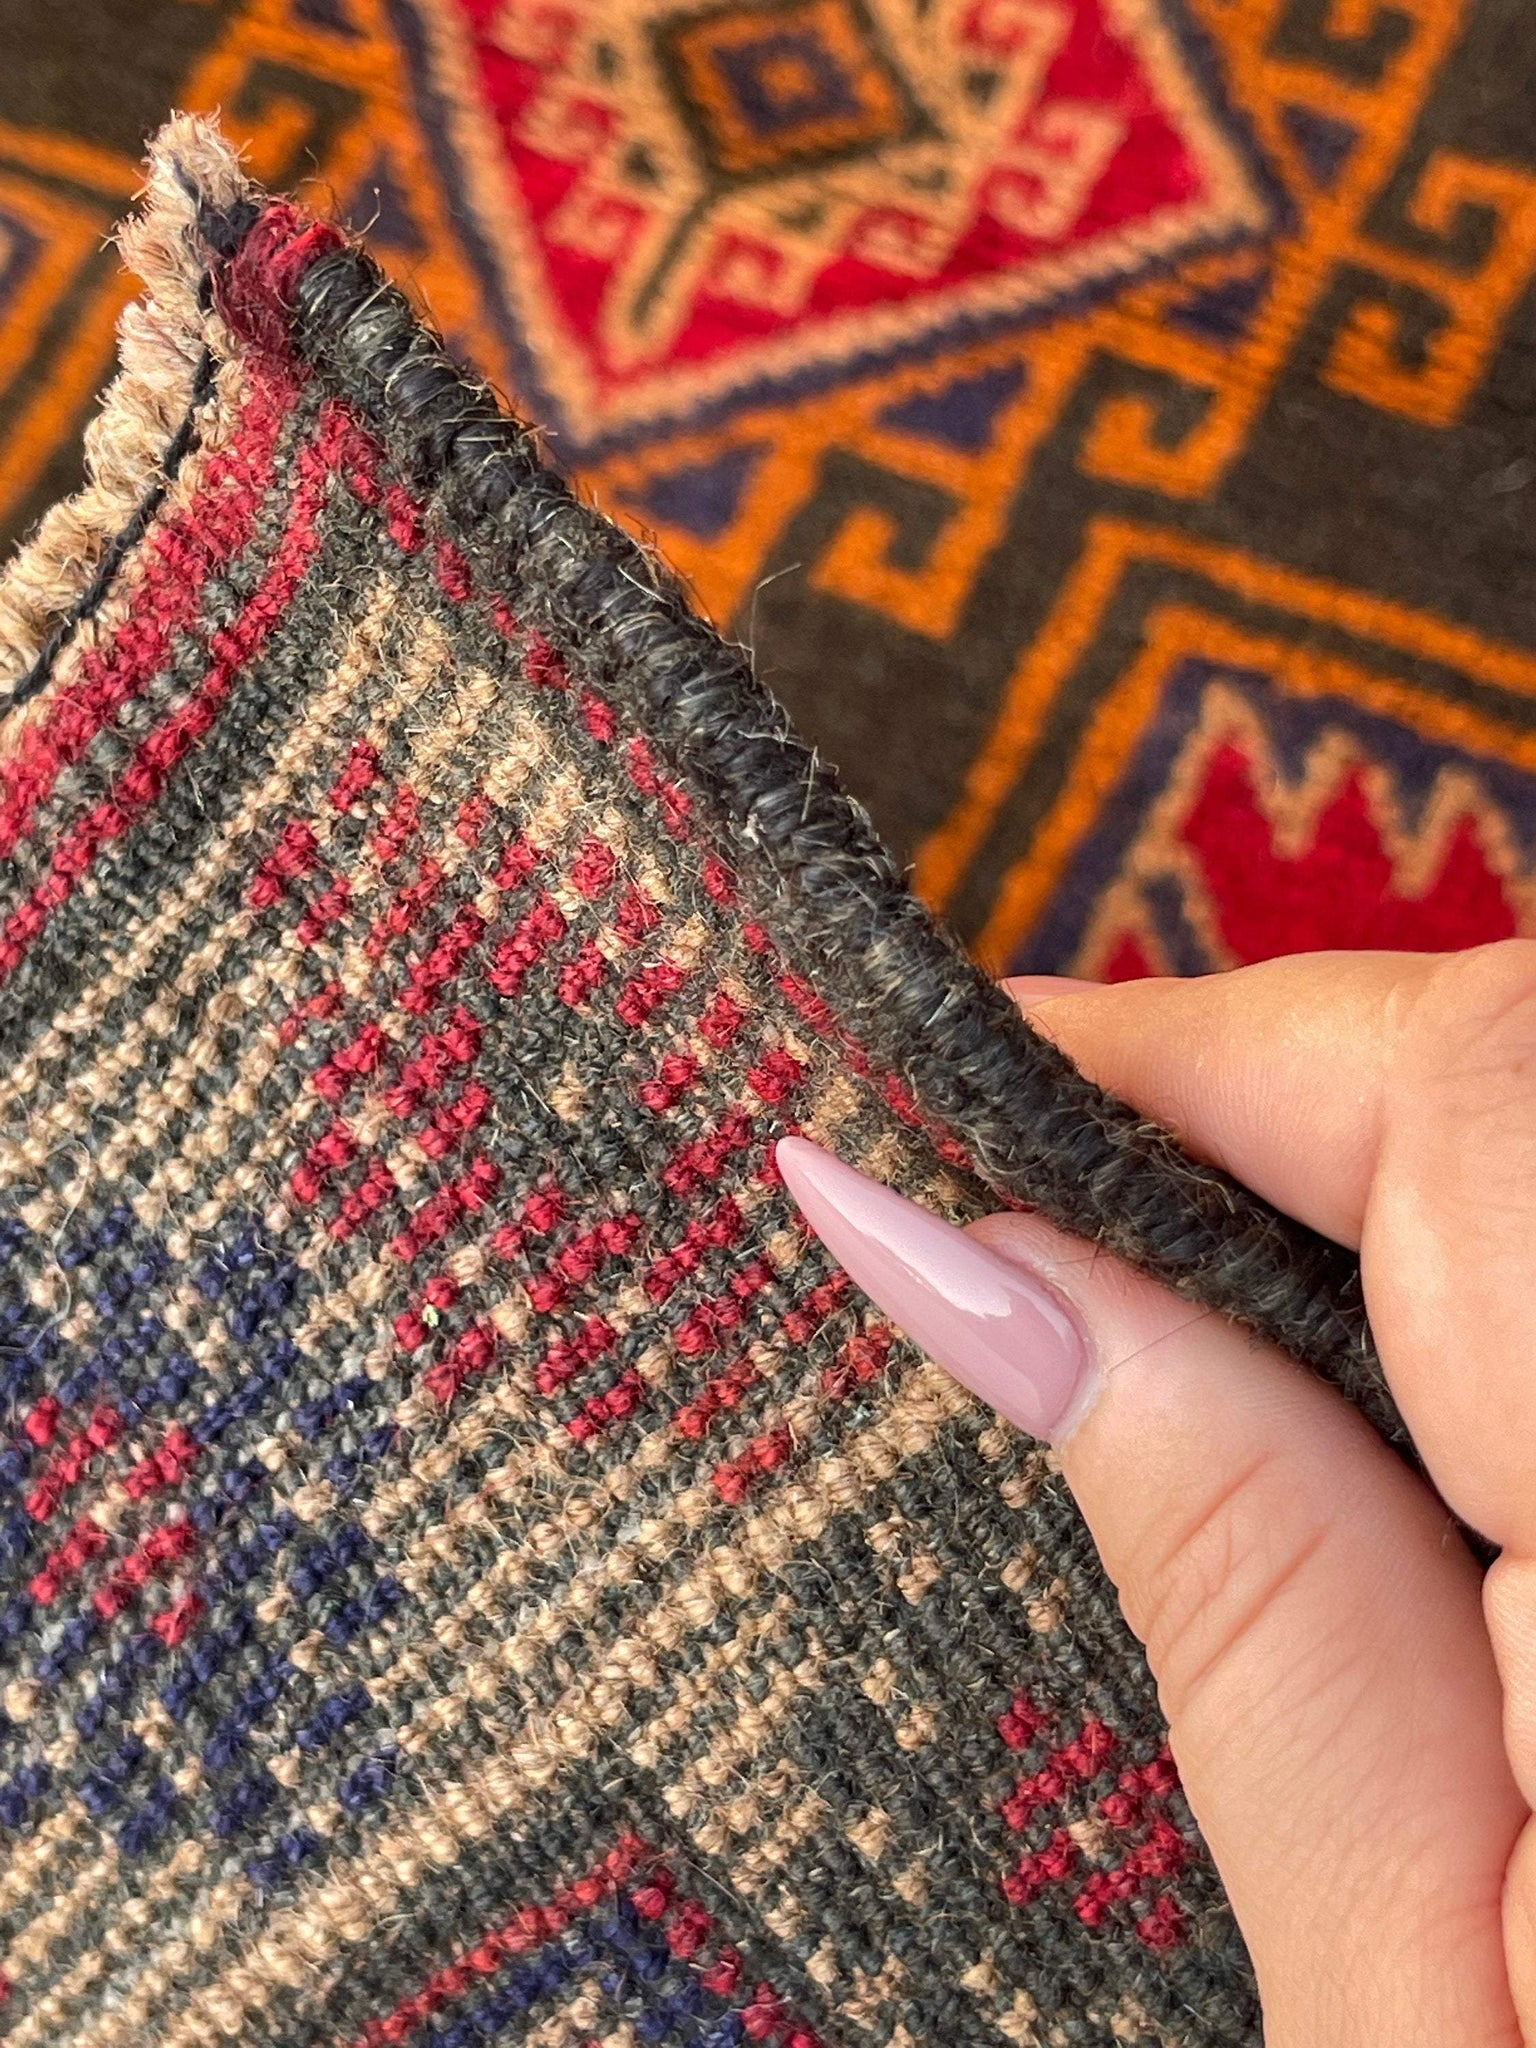 3x4 (90x120) Handmade Vintage Afghan Rug | Red Navy Blue Gold | Nomadic Baluch Boho Bohemian Tribal Turkish Moroccan Wool